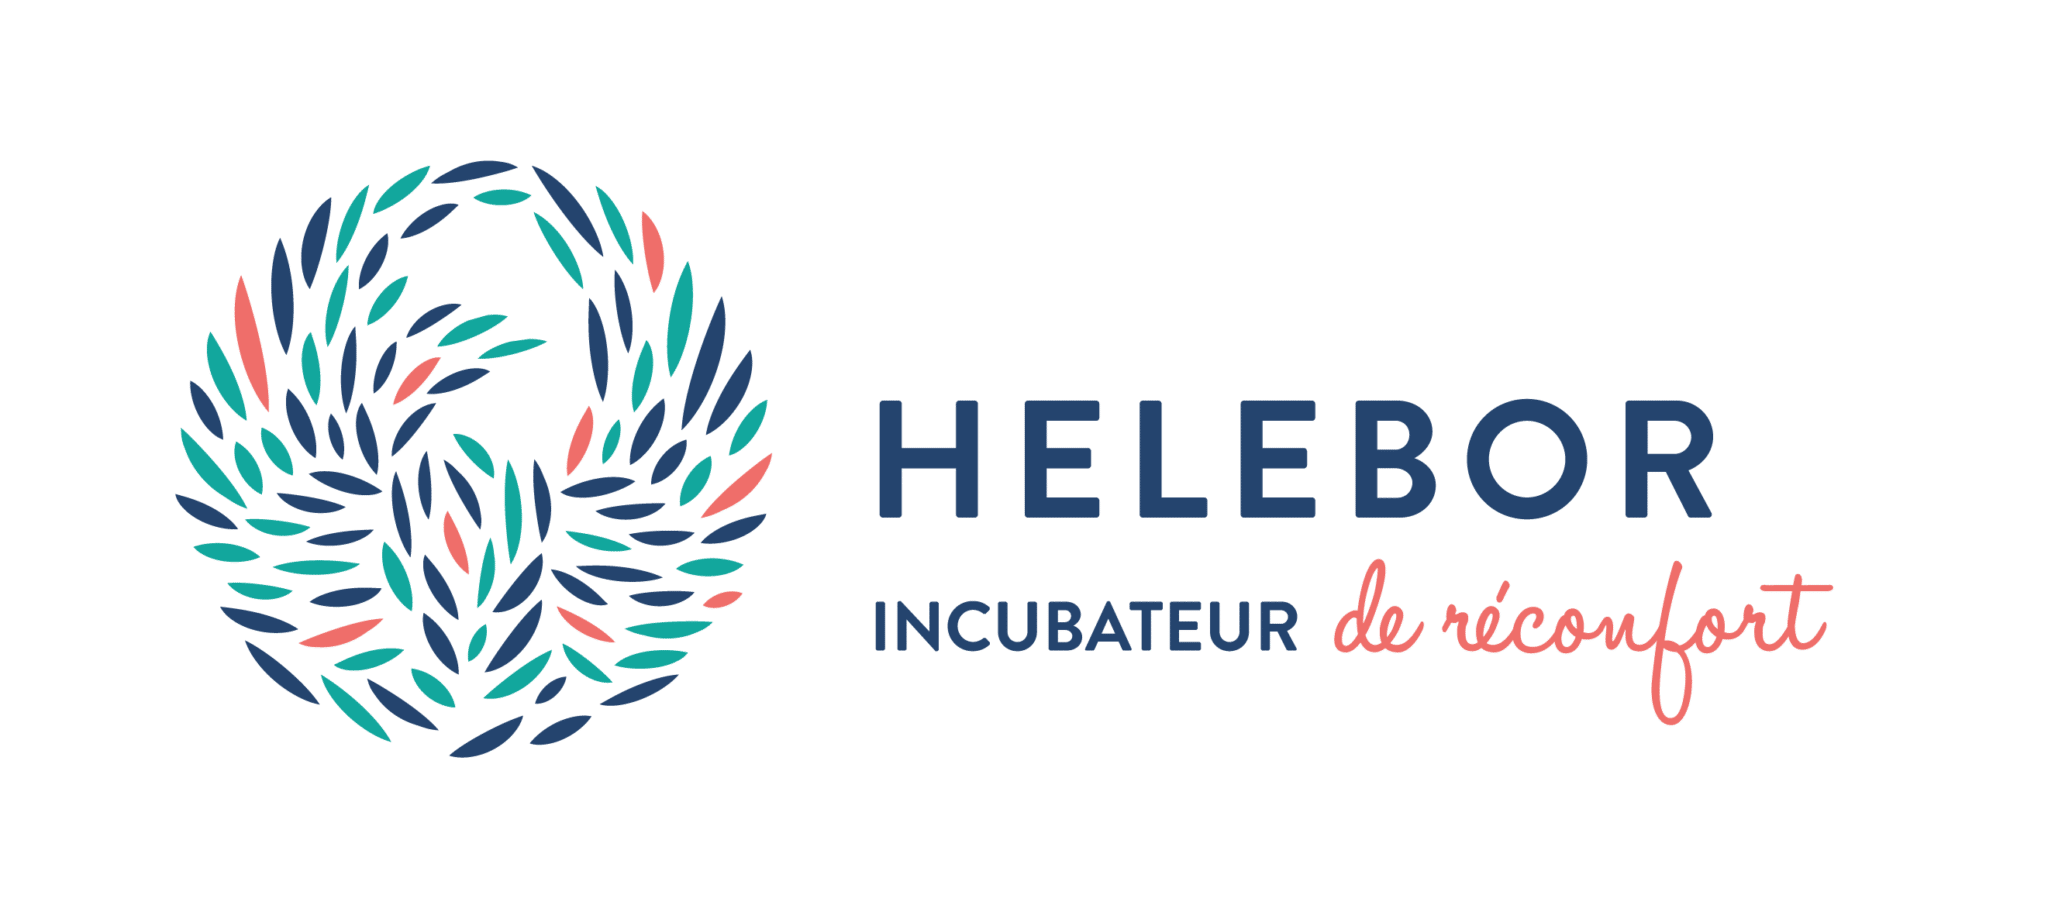 Helebor logo 1